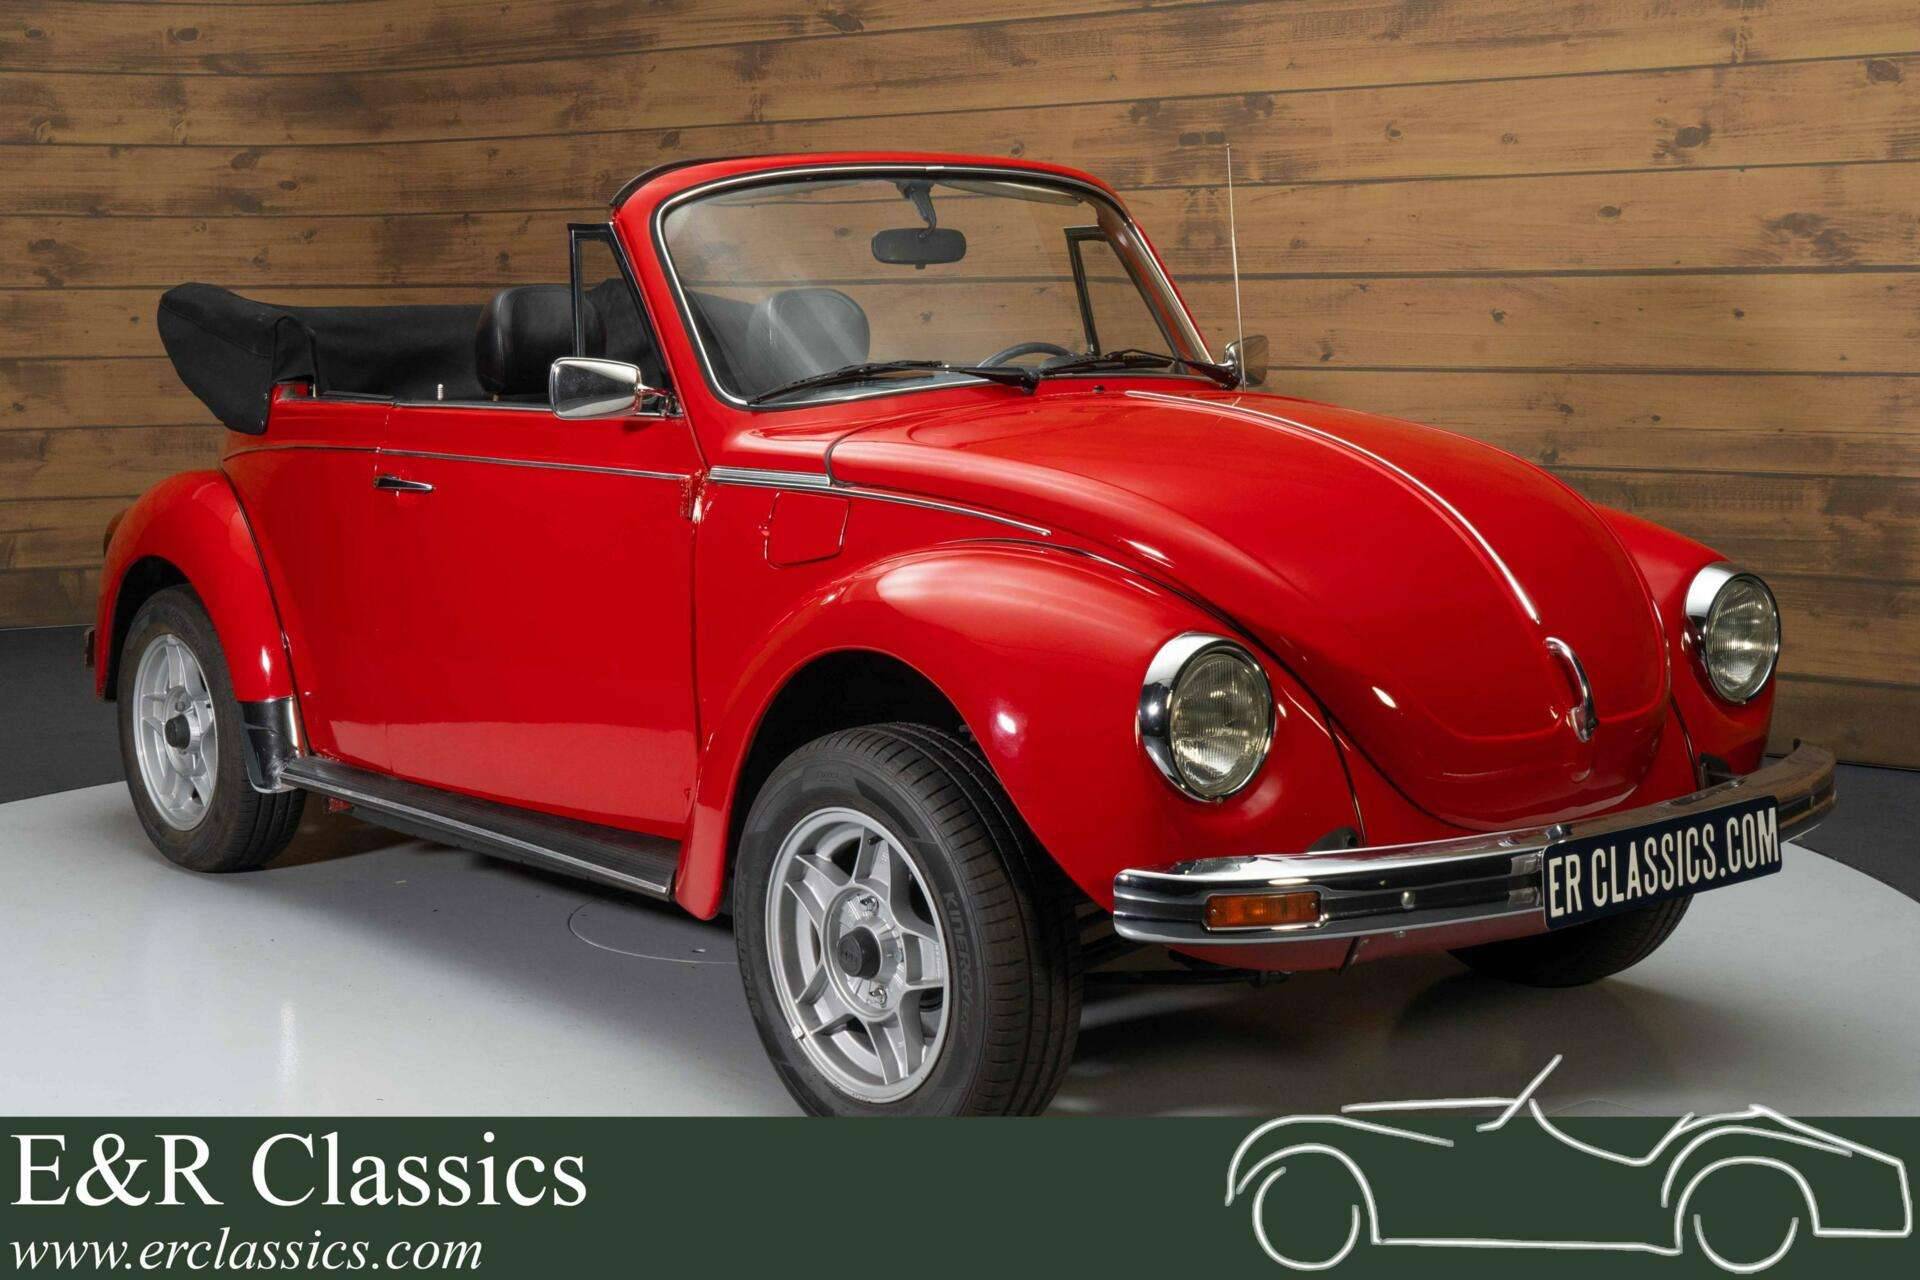 For Sale: Volkswagen Beetle 1303 (1976) offered for €36,950